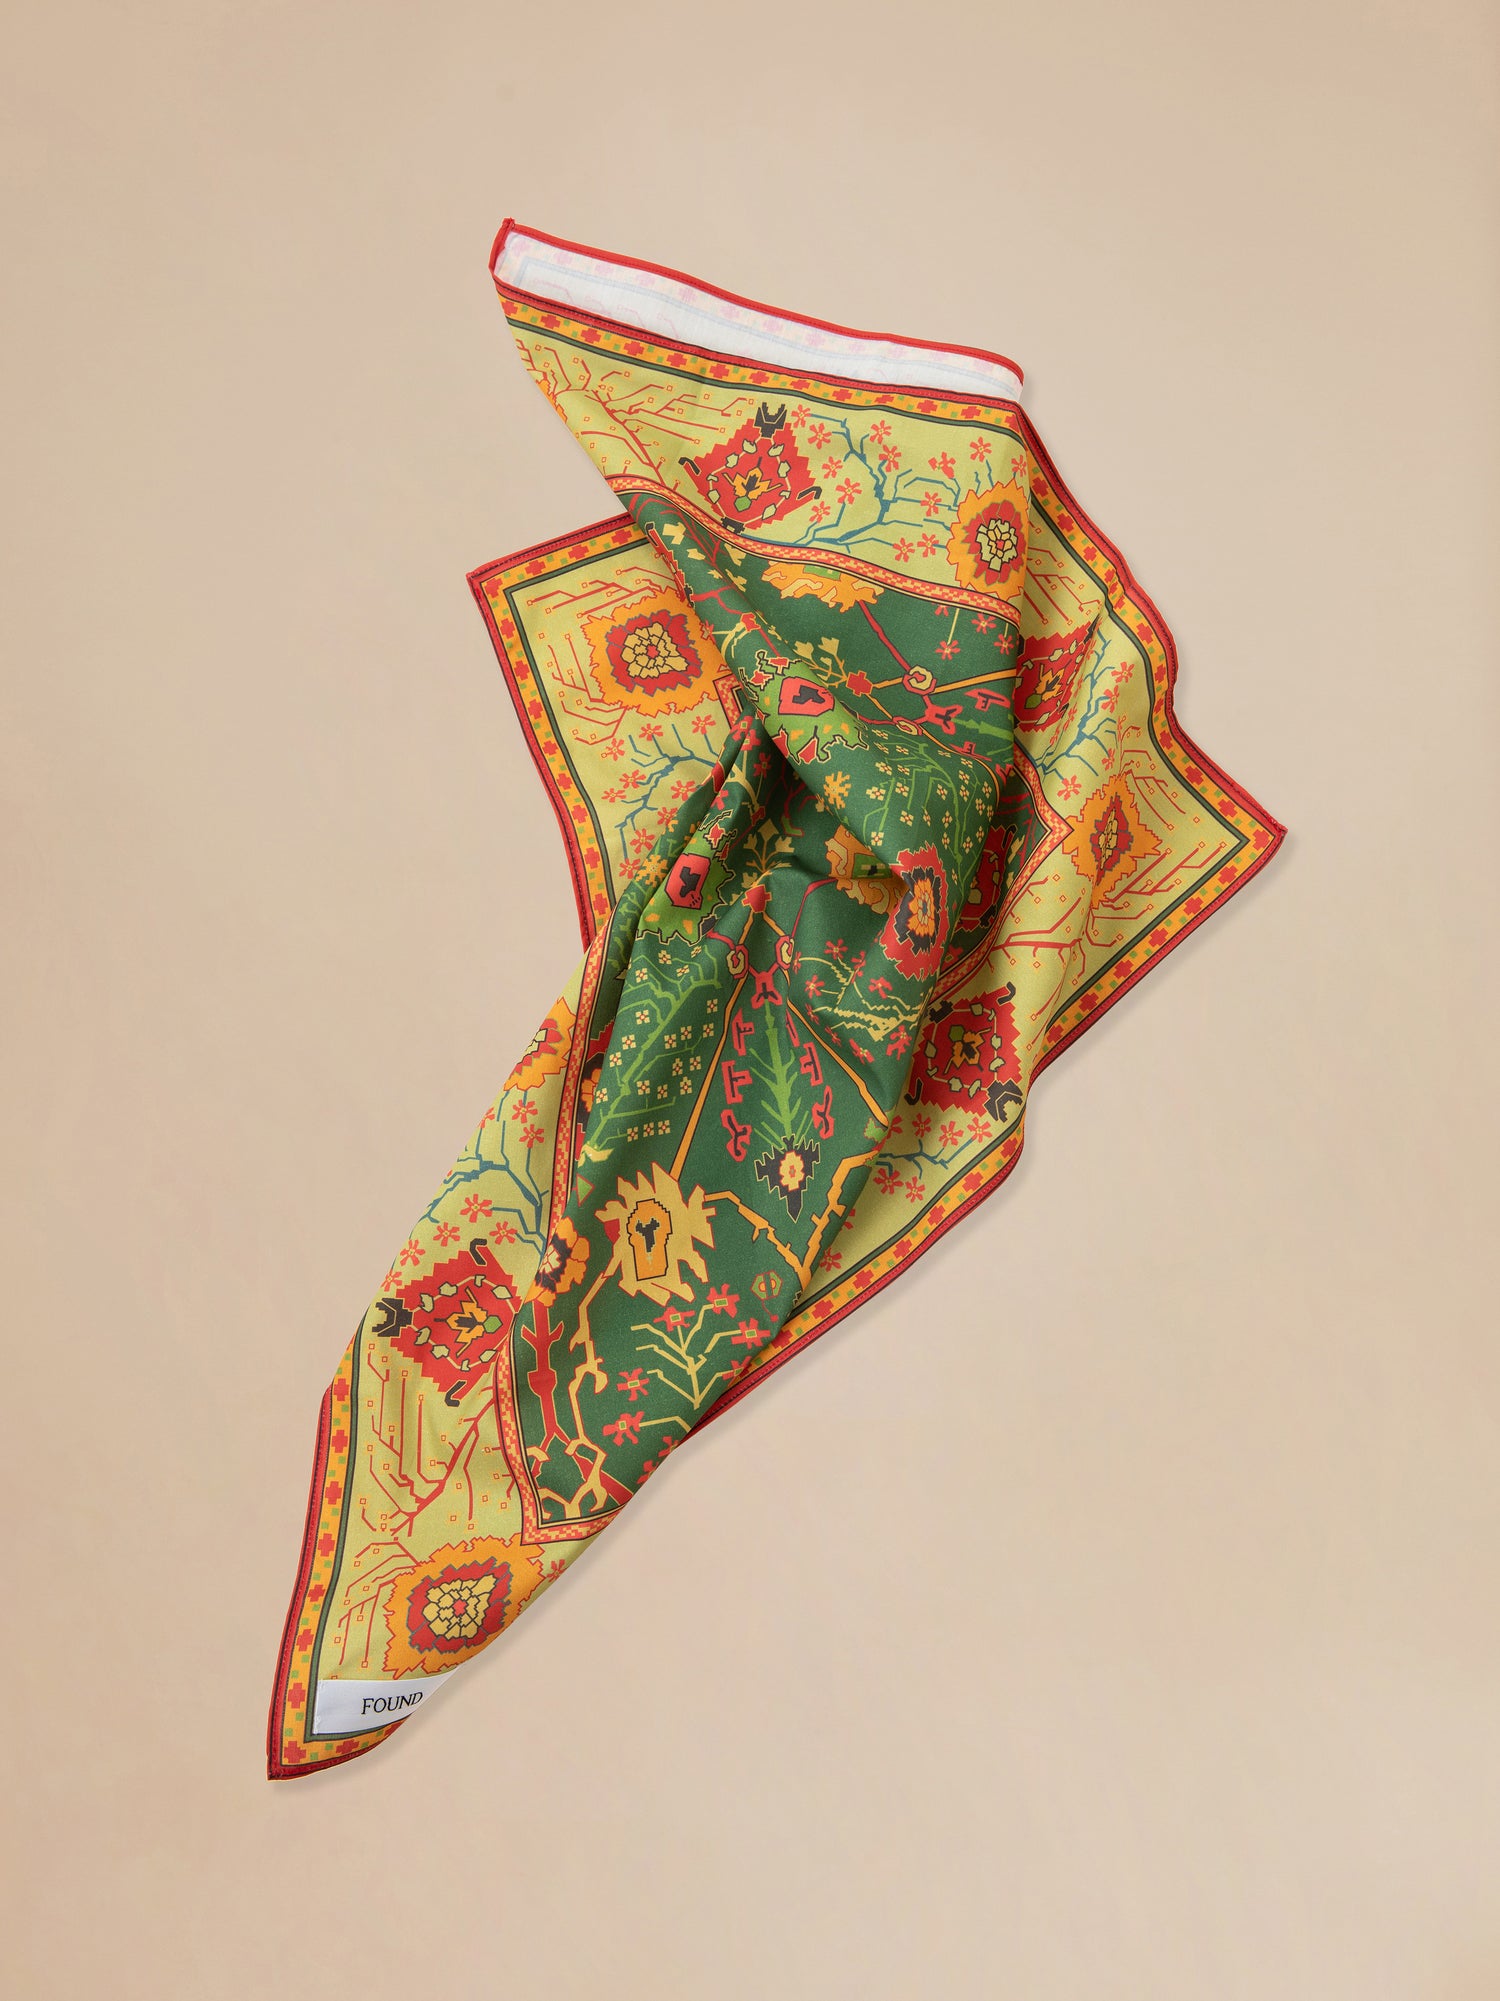 A Found Botanical Mosaic Bandana handkerchief.